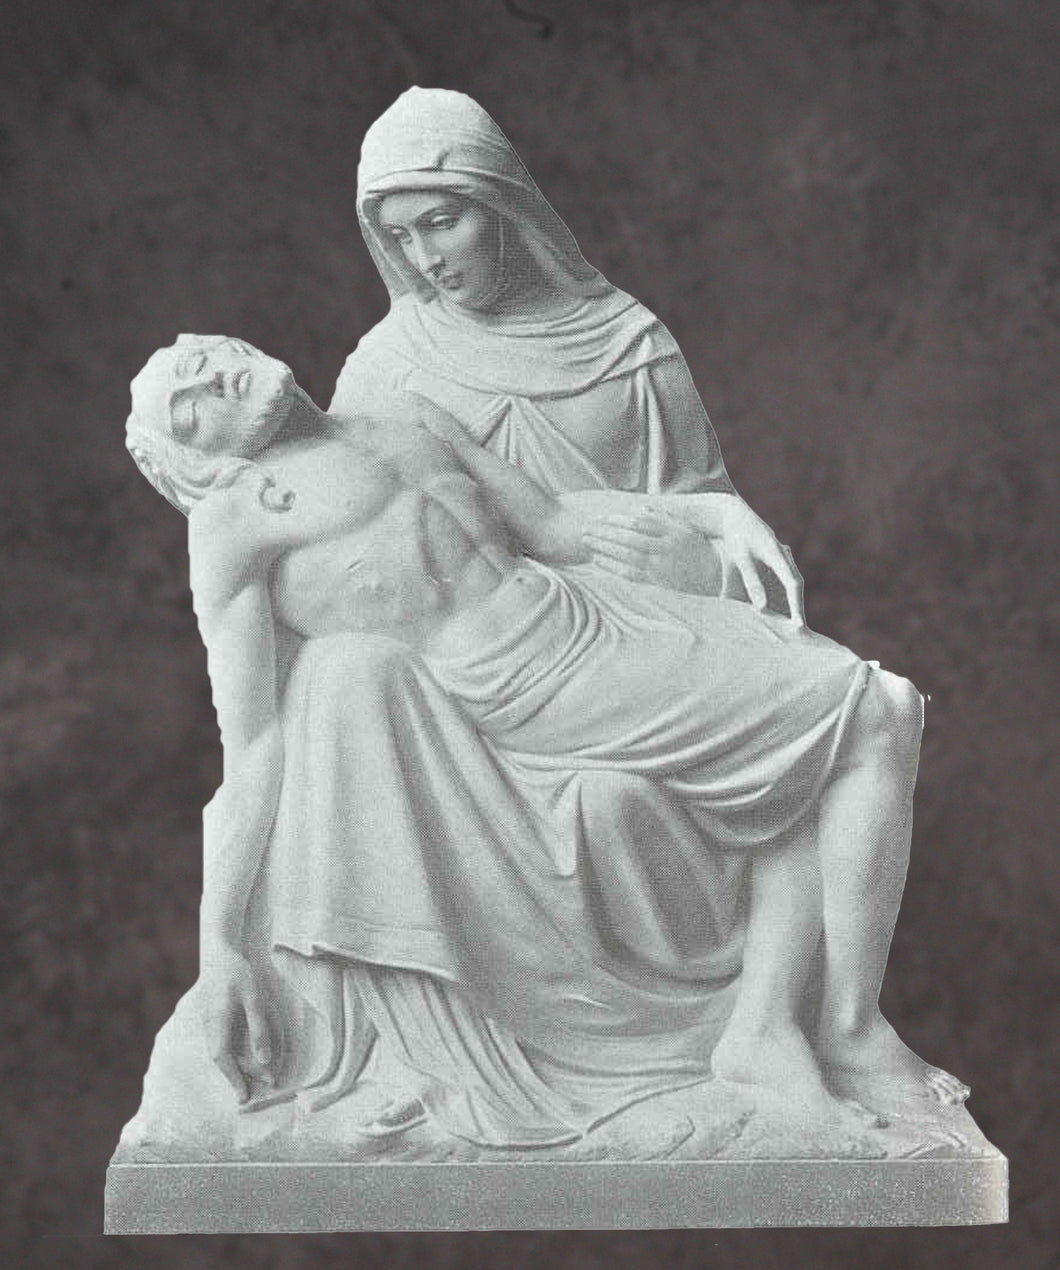 Pieta Statue by De De Prato in Solid Marble - 12”H